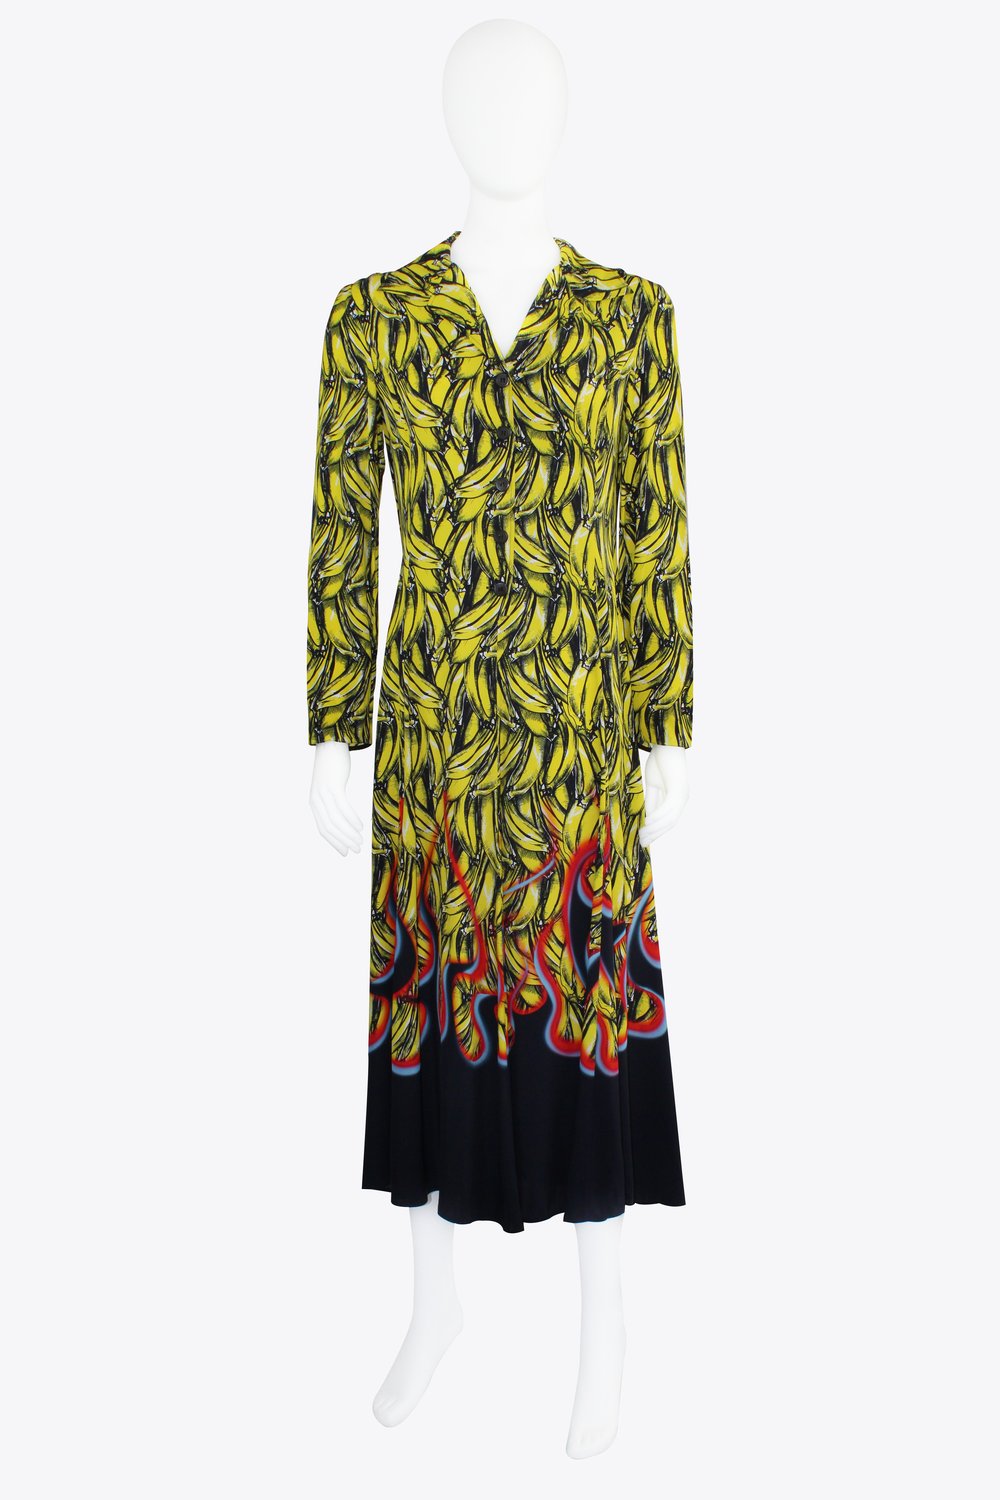 Prada Banana Flame Dress